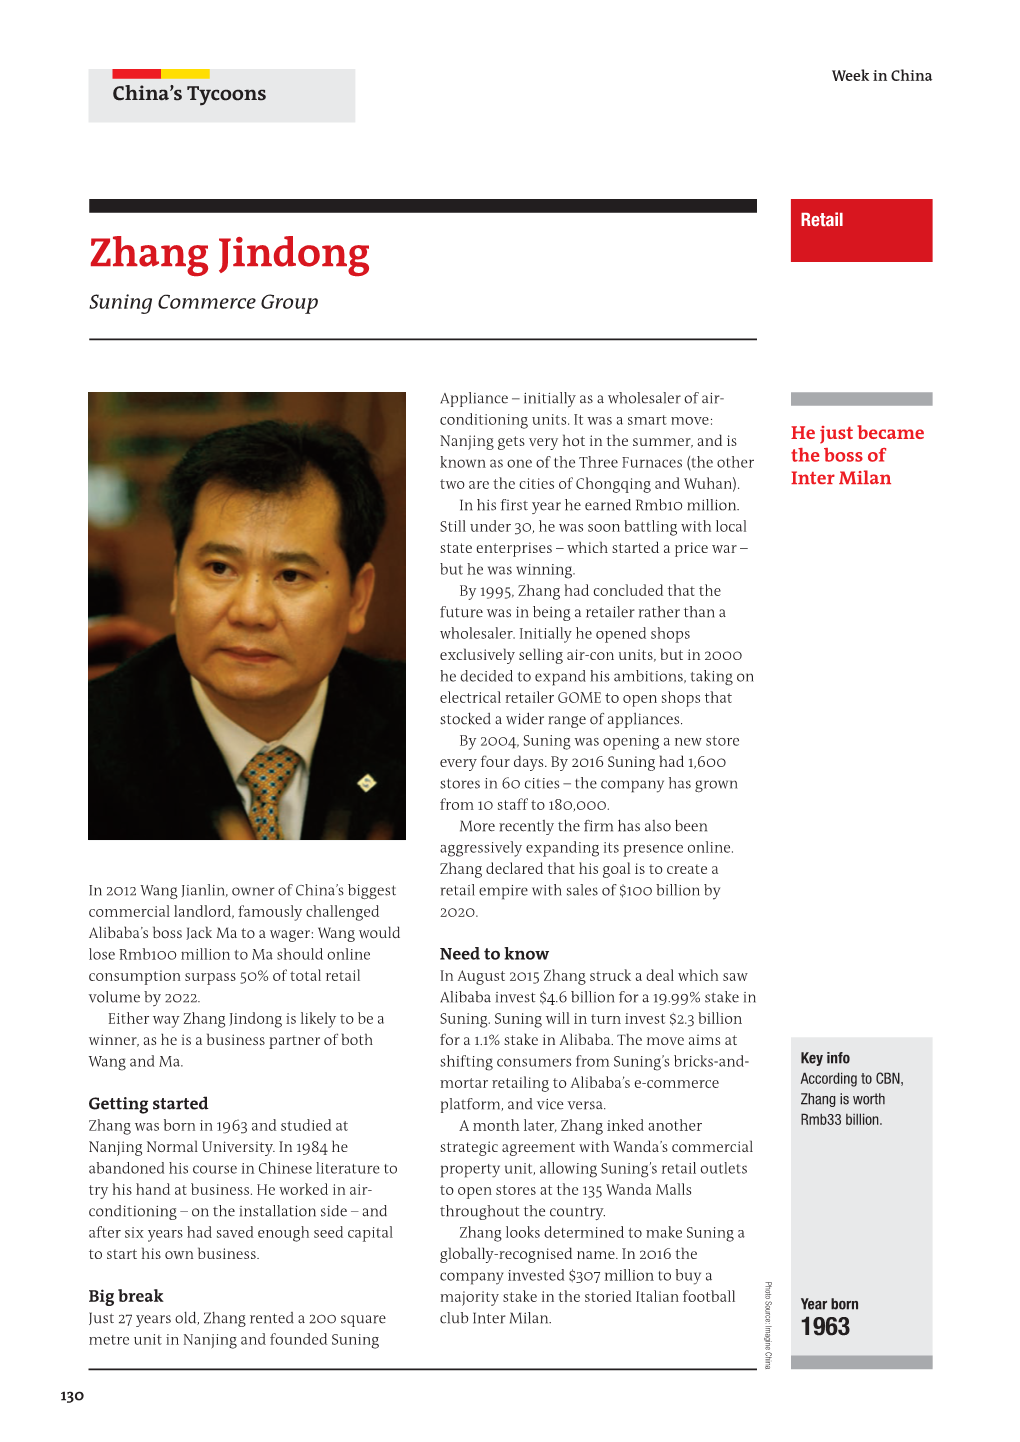 Zhang Jindong Suning Commerce Group